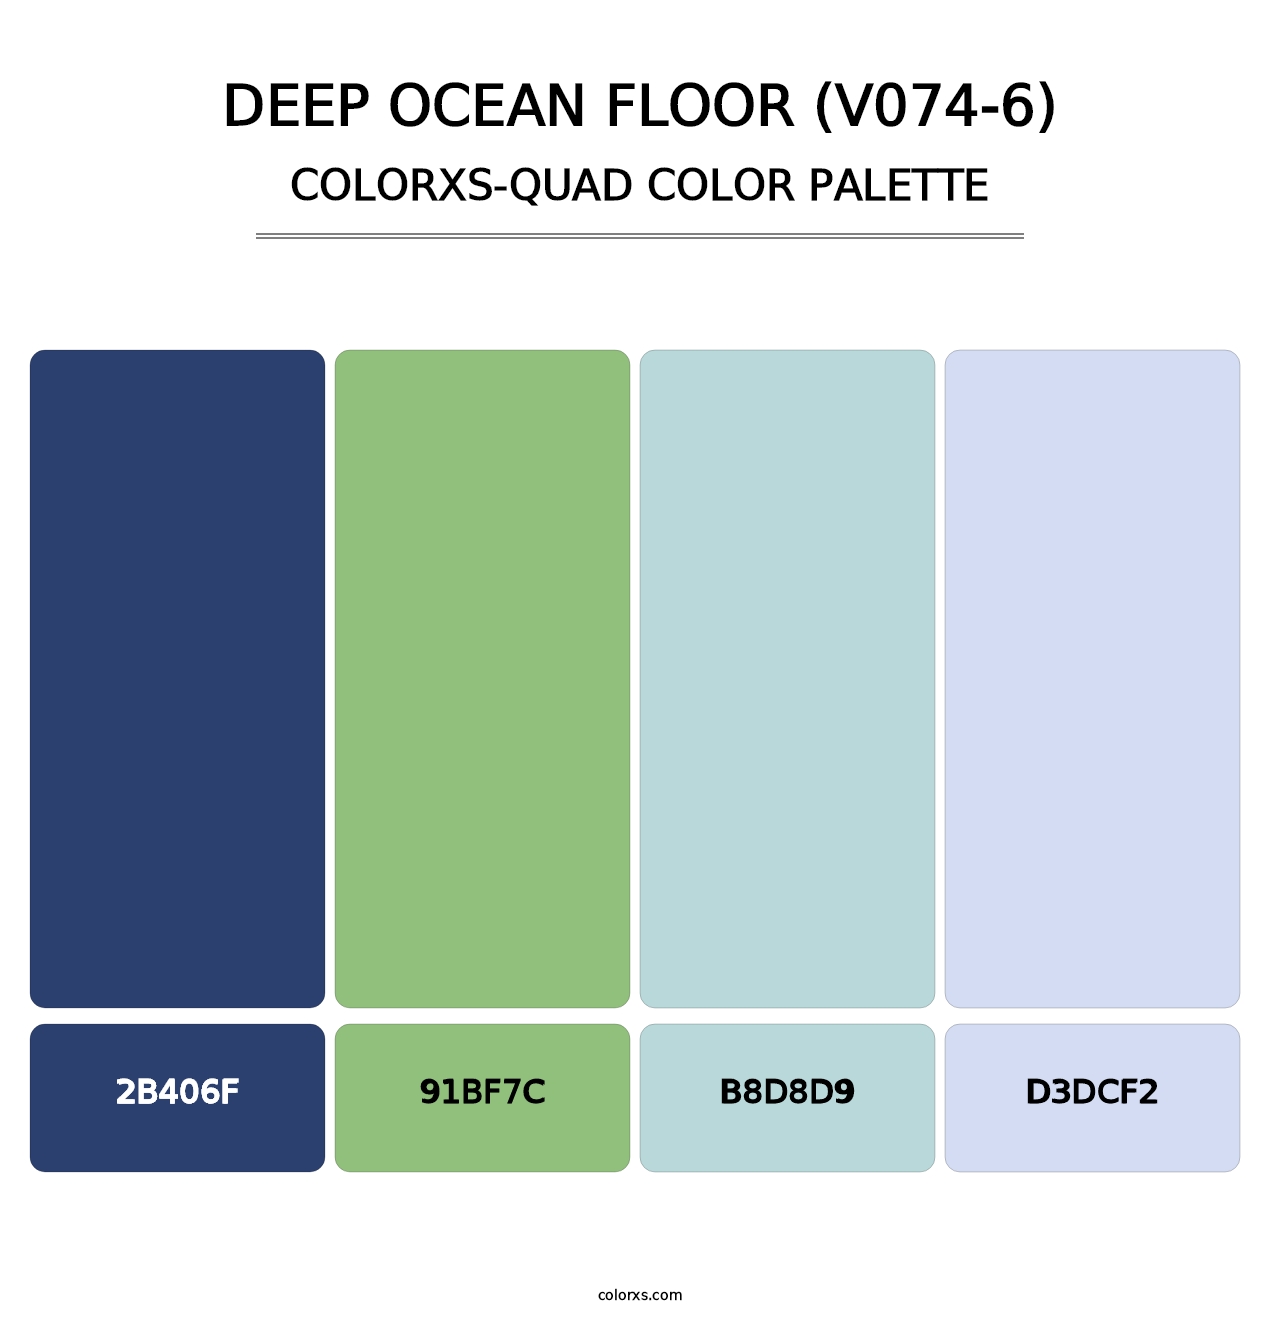 Deep Ocean Floor (V074-6) - Colorxs Quad Palette